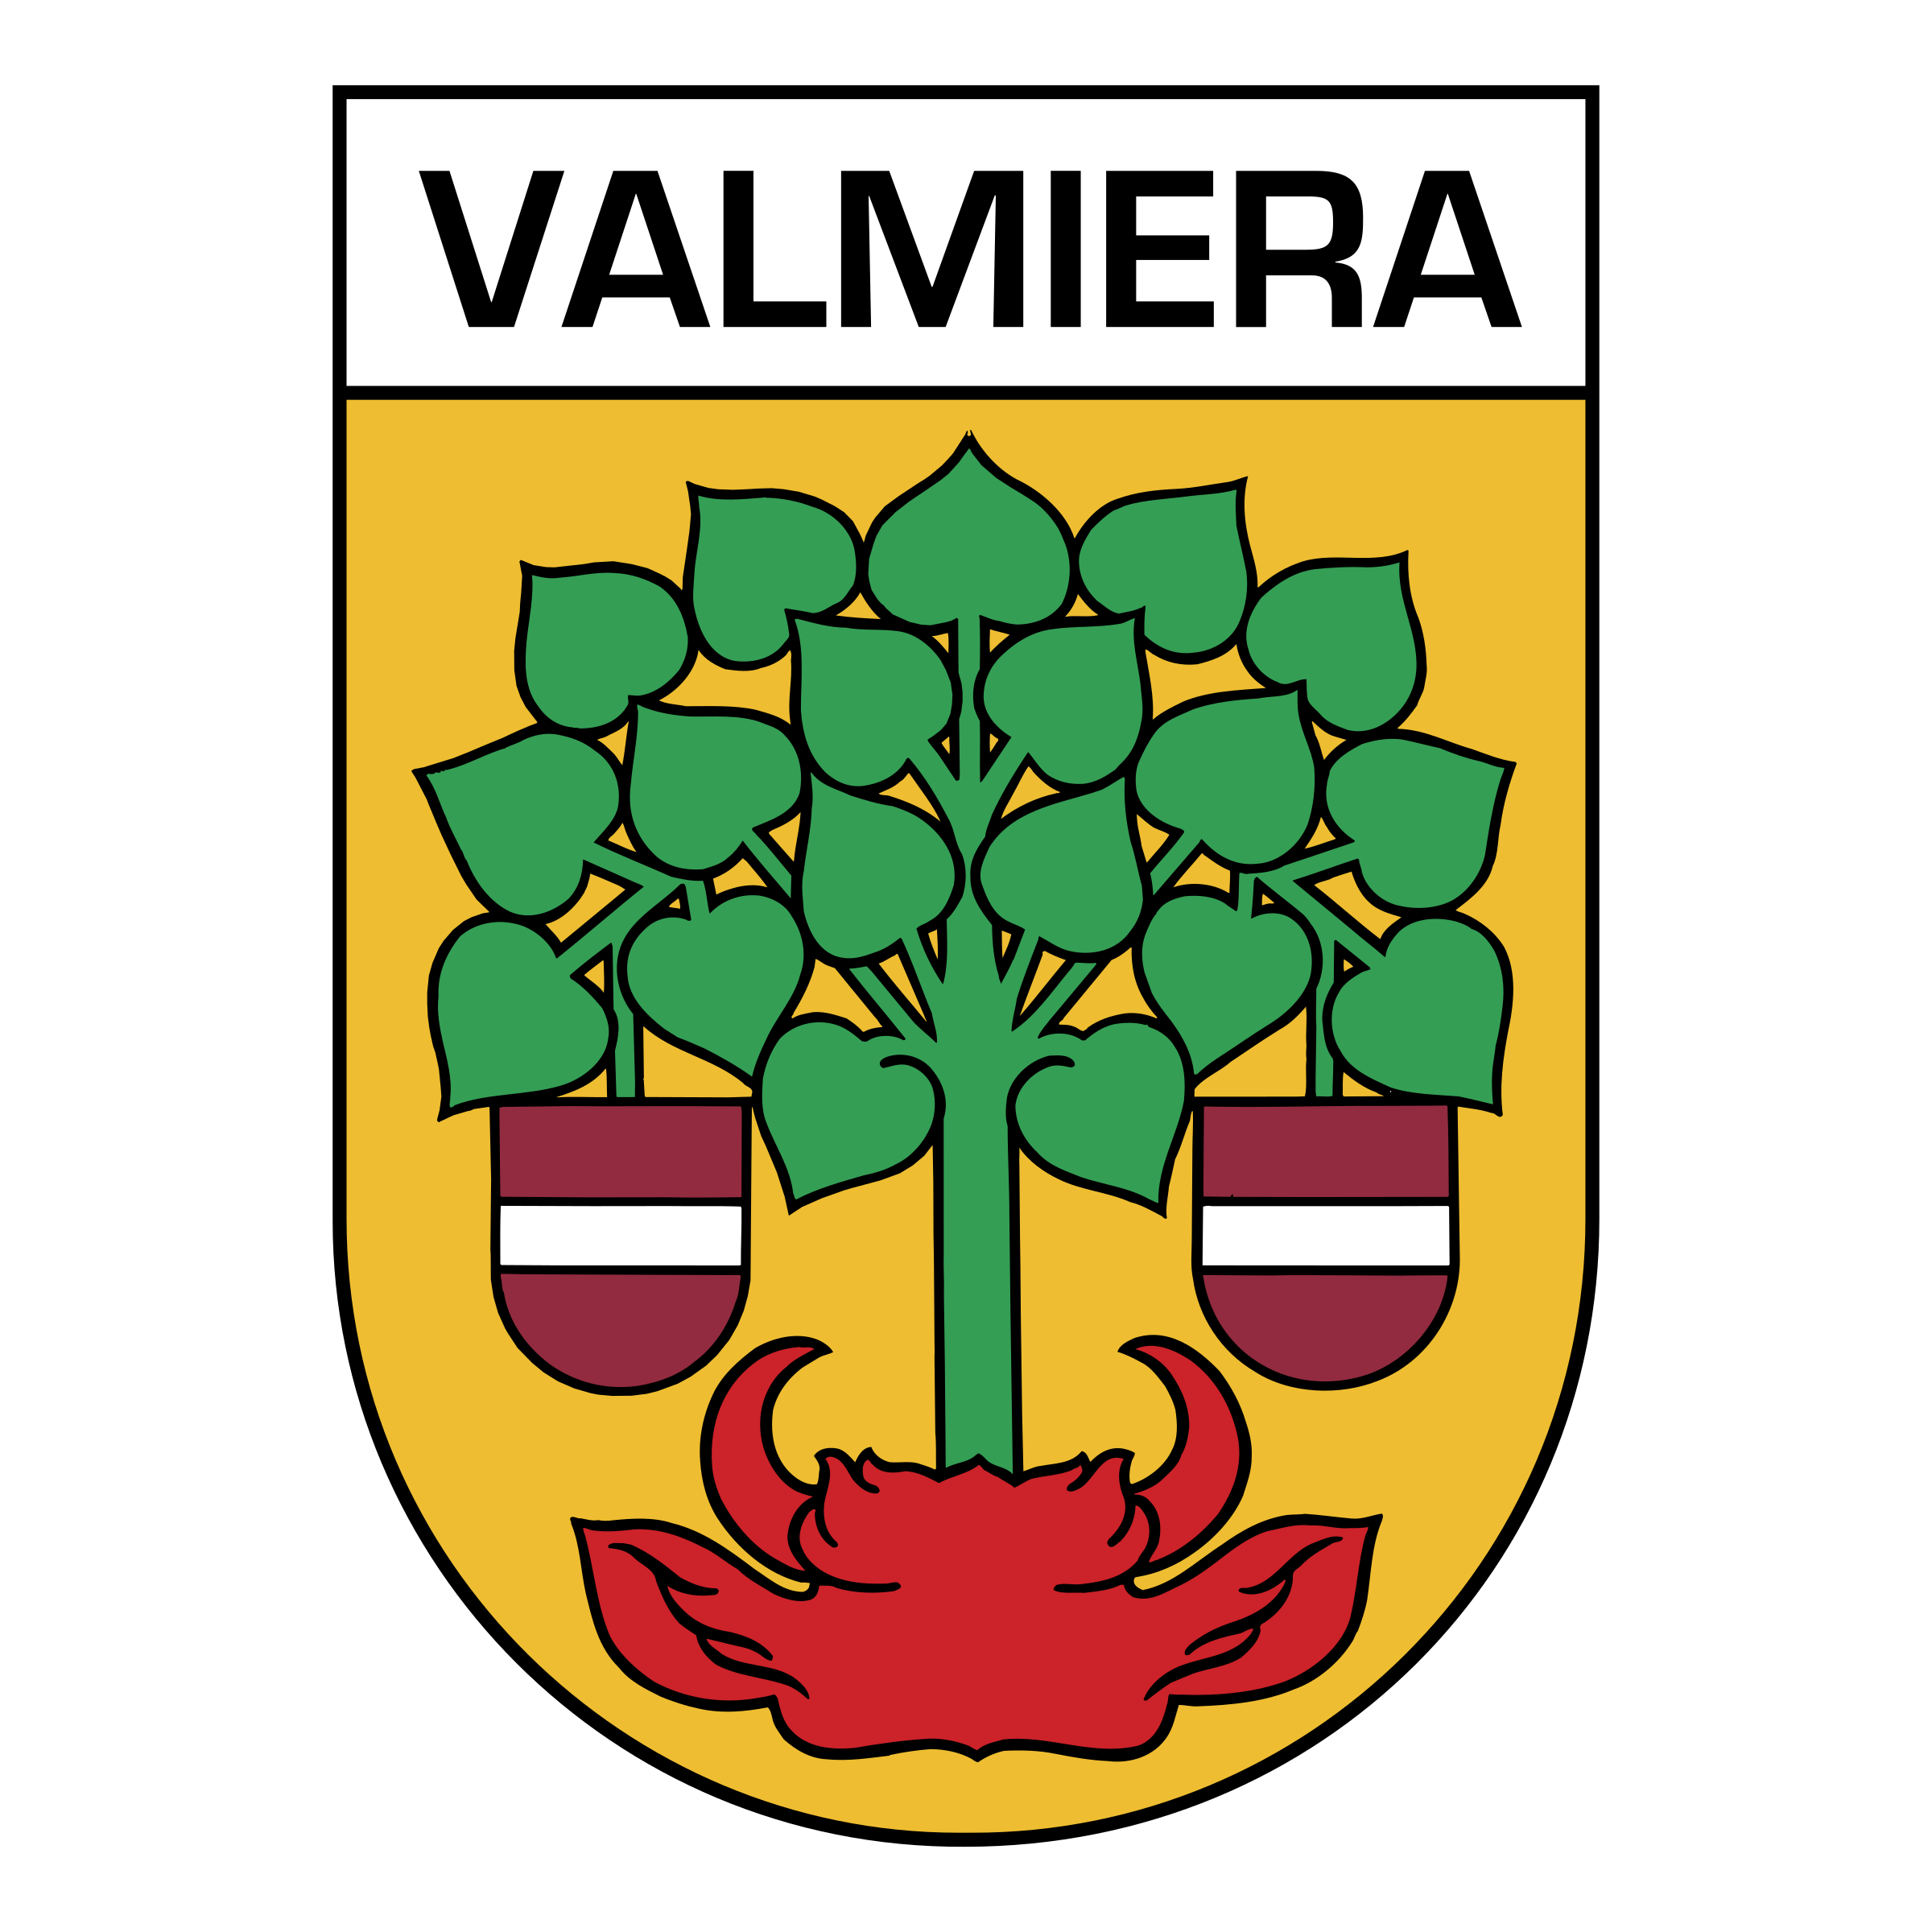 Valmiera